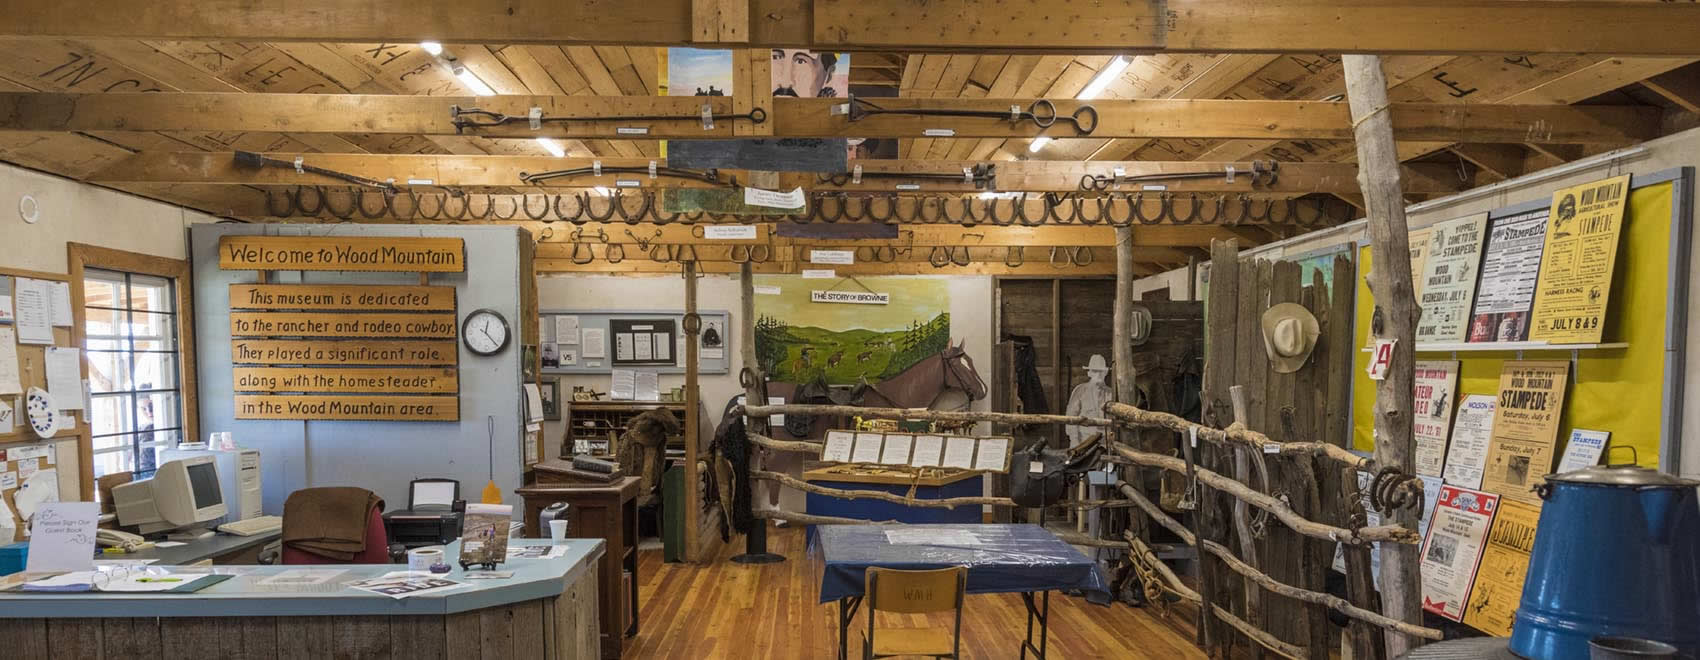 Wood Mountain Rodeo Ranch Museum Saskatchewan - James R Page